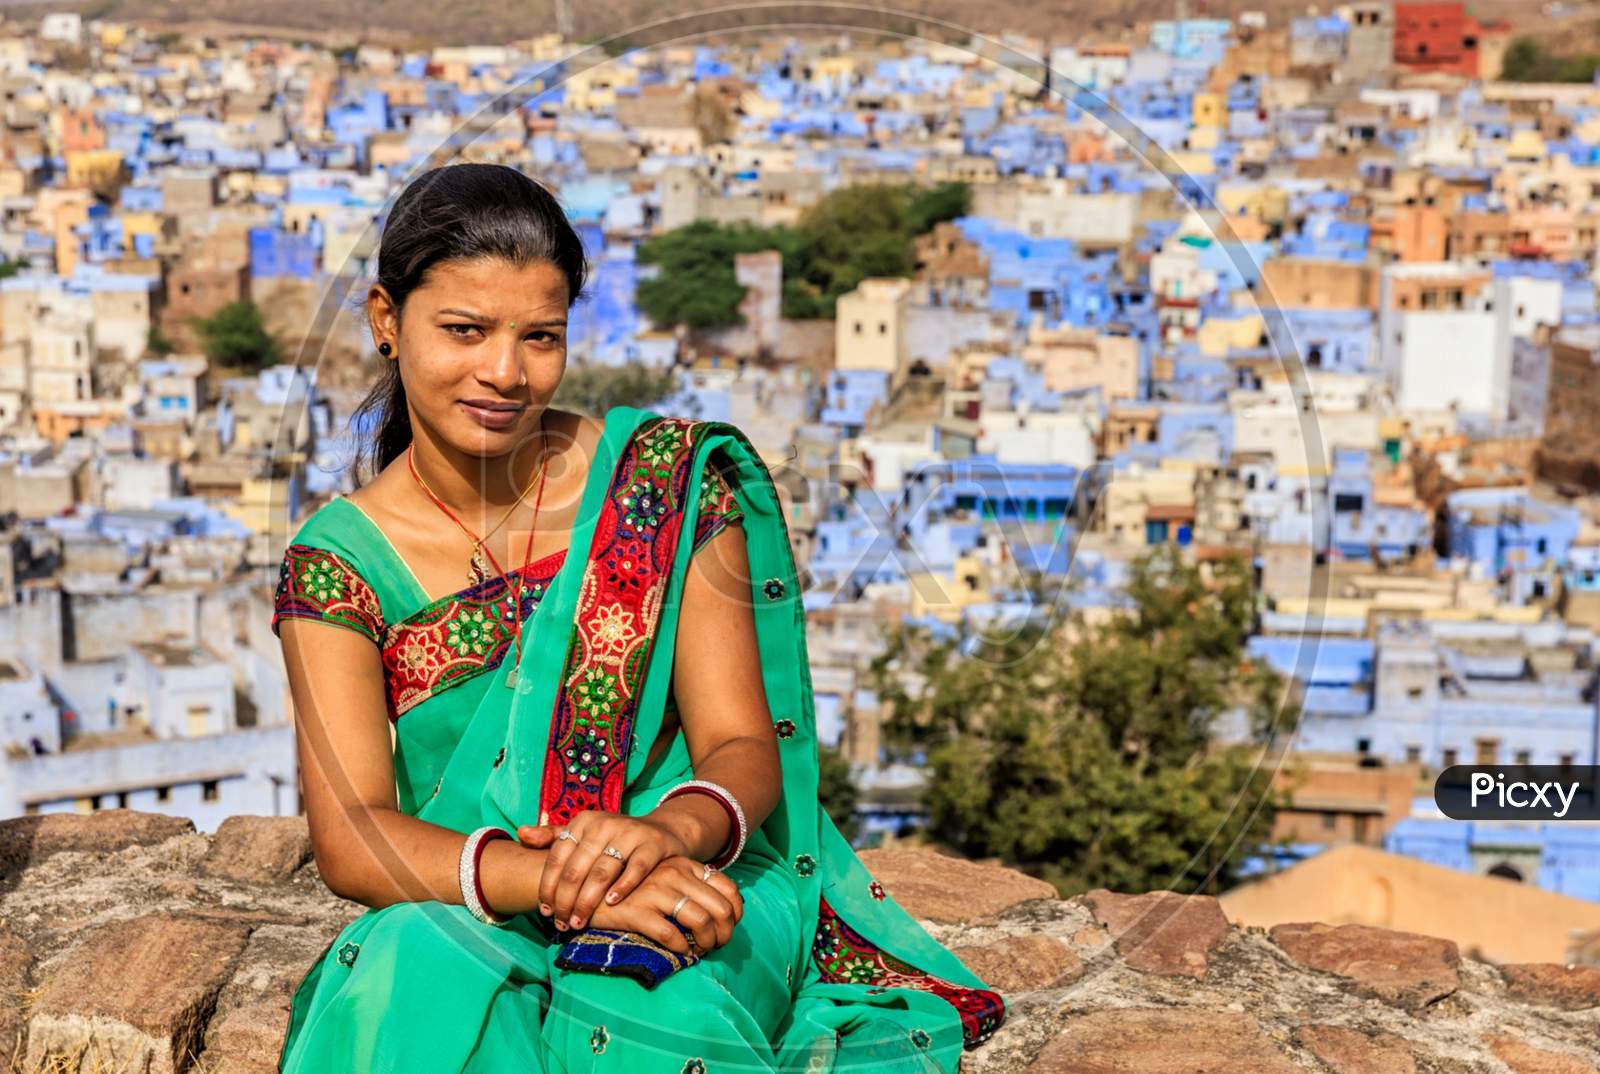 Young Indian woman , Jaipur, India